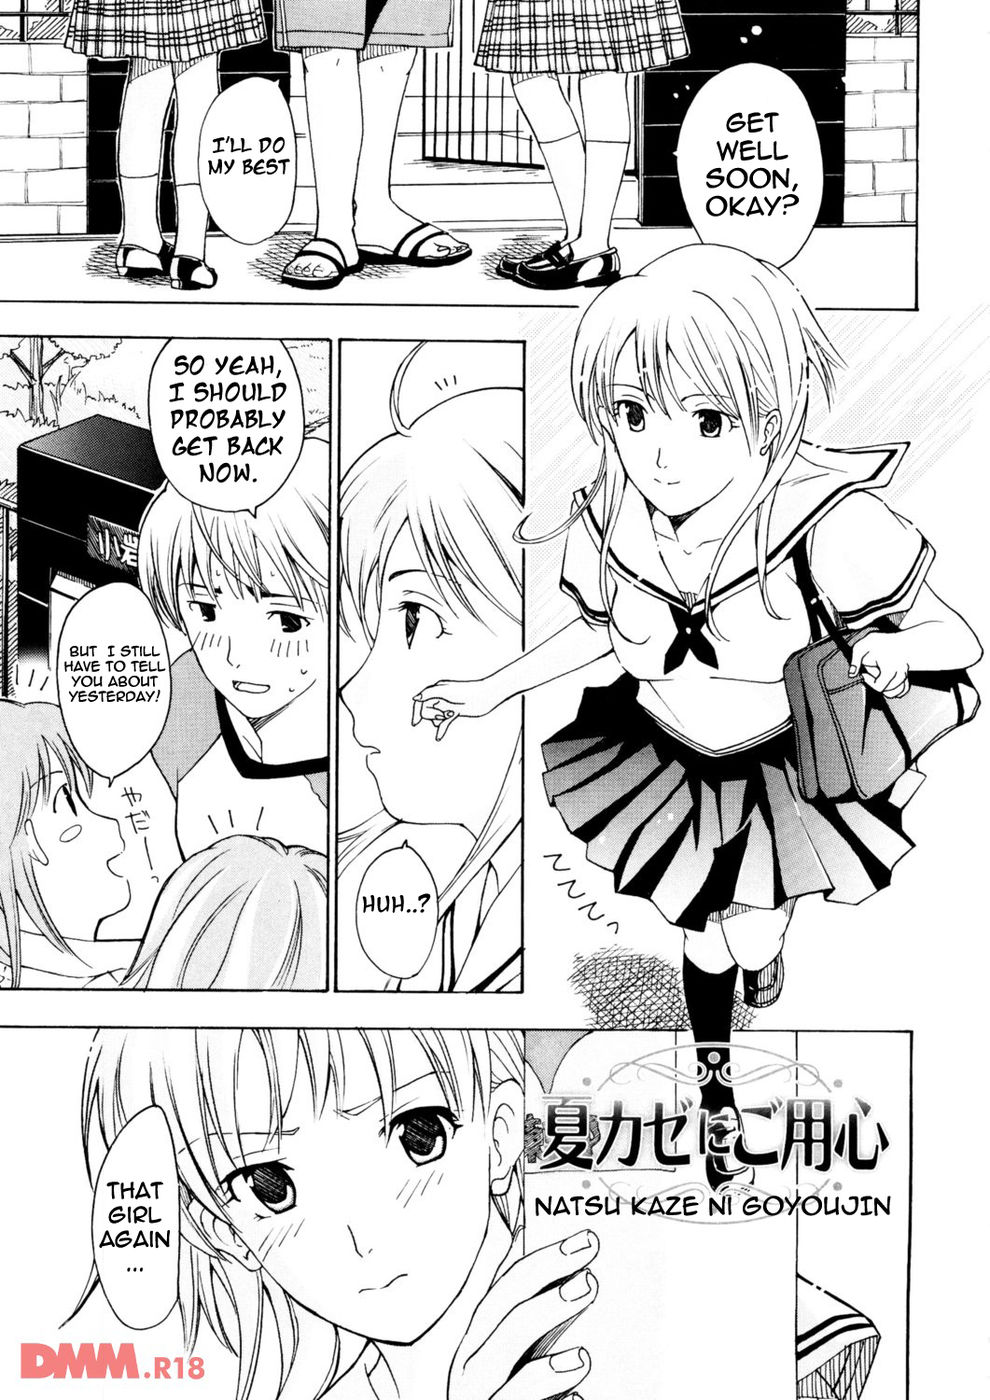 Hentai Manga Comic-Natsu kaze ni goyoujin-Read-2